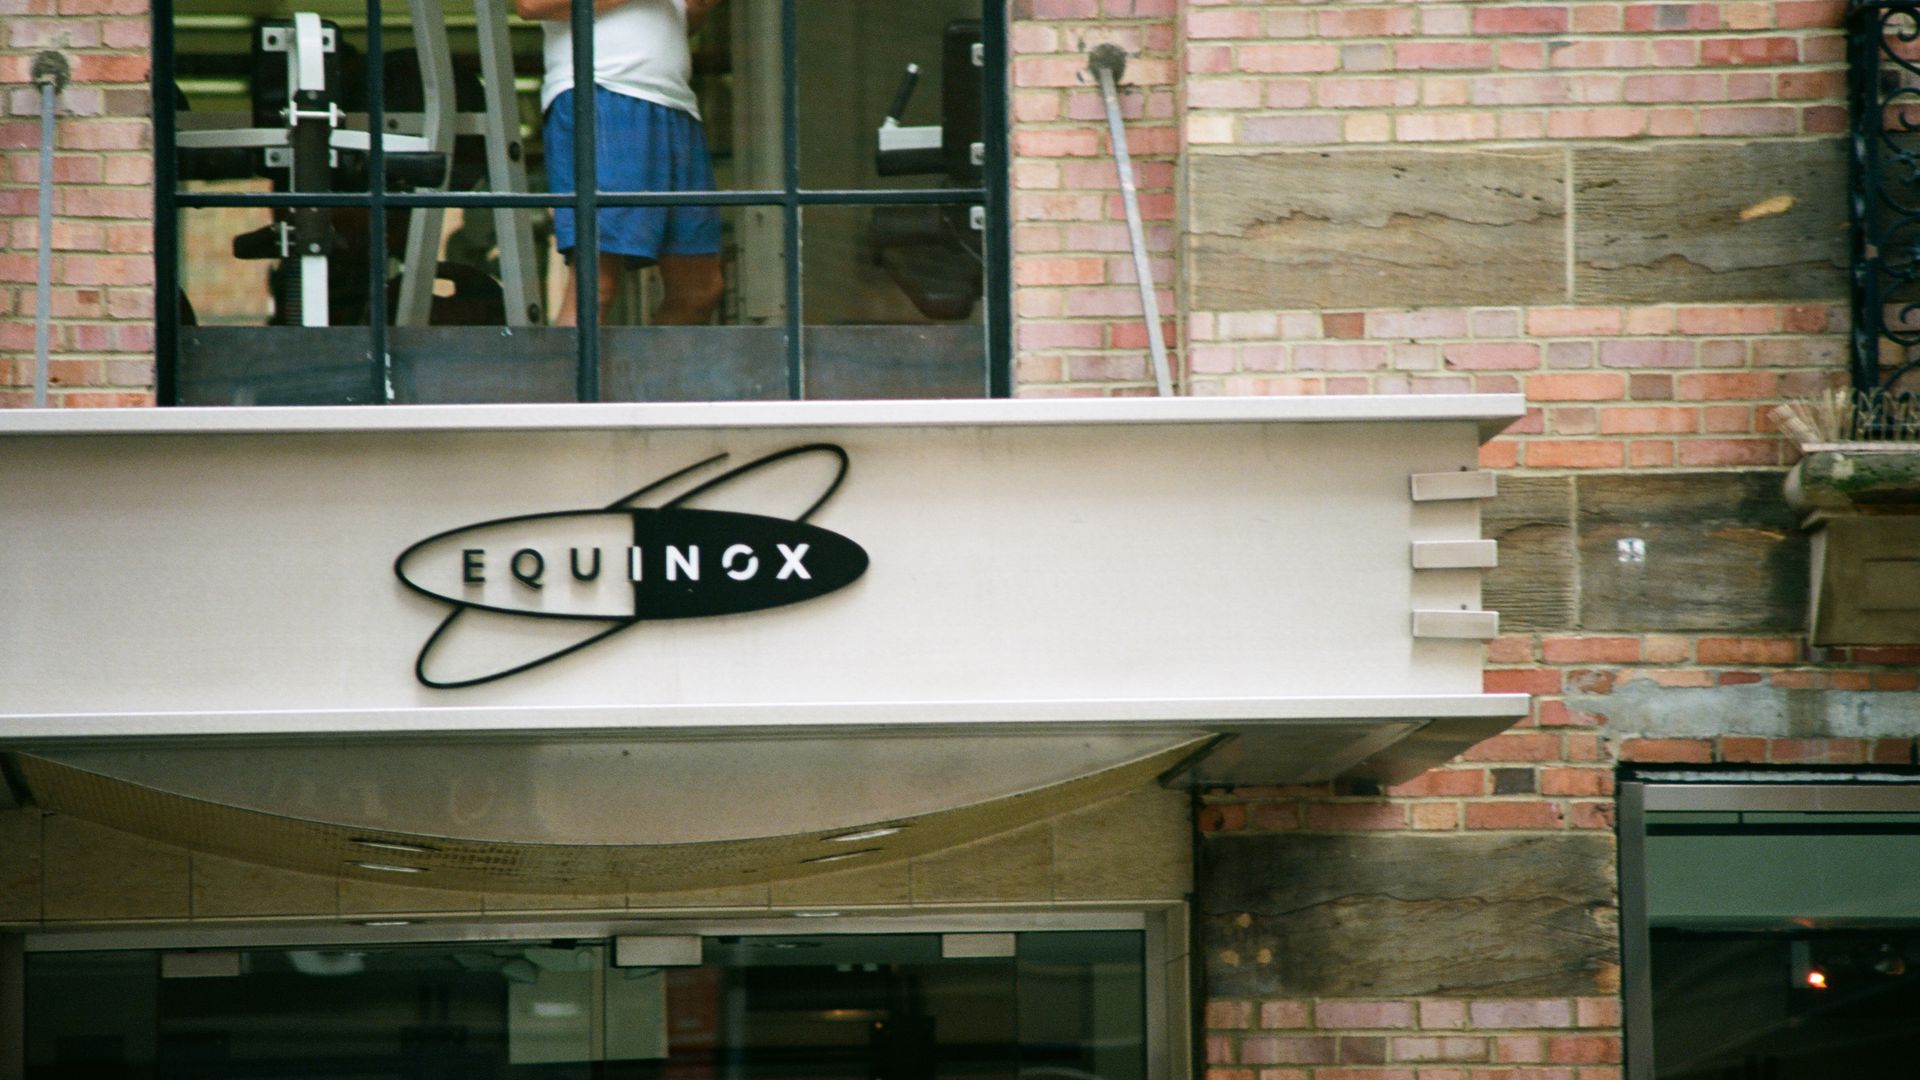 Equinox logo on a building